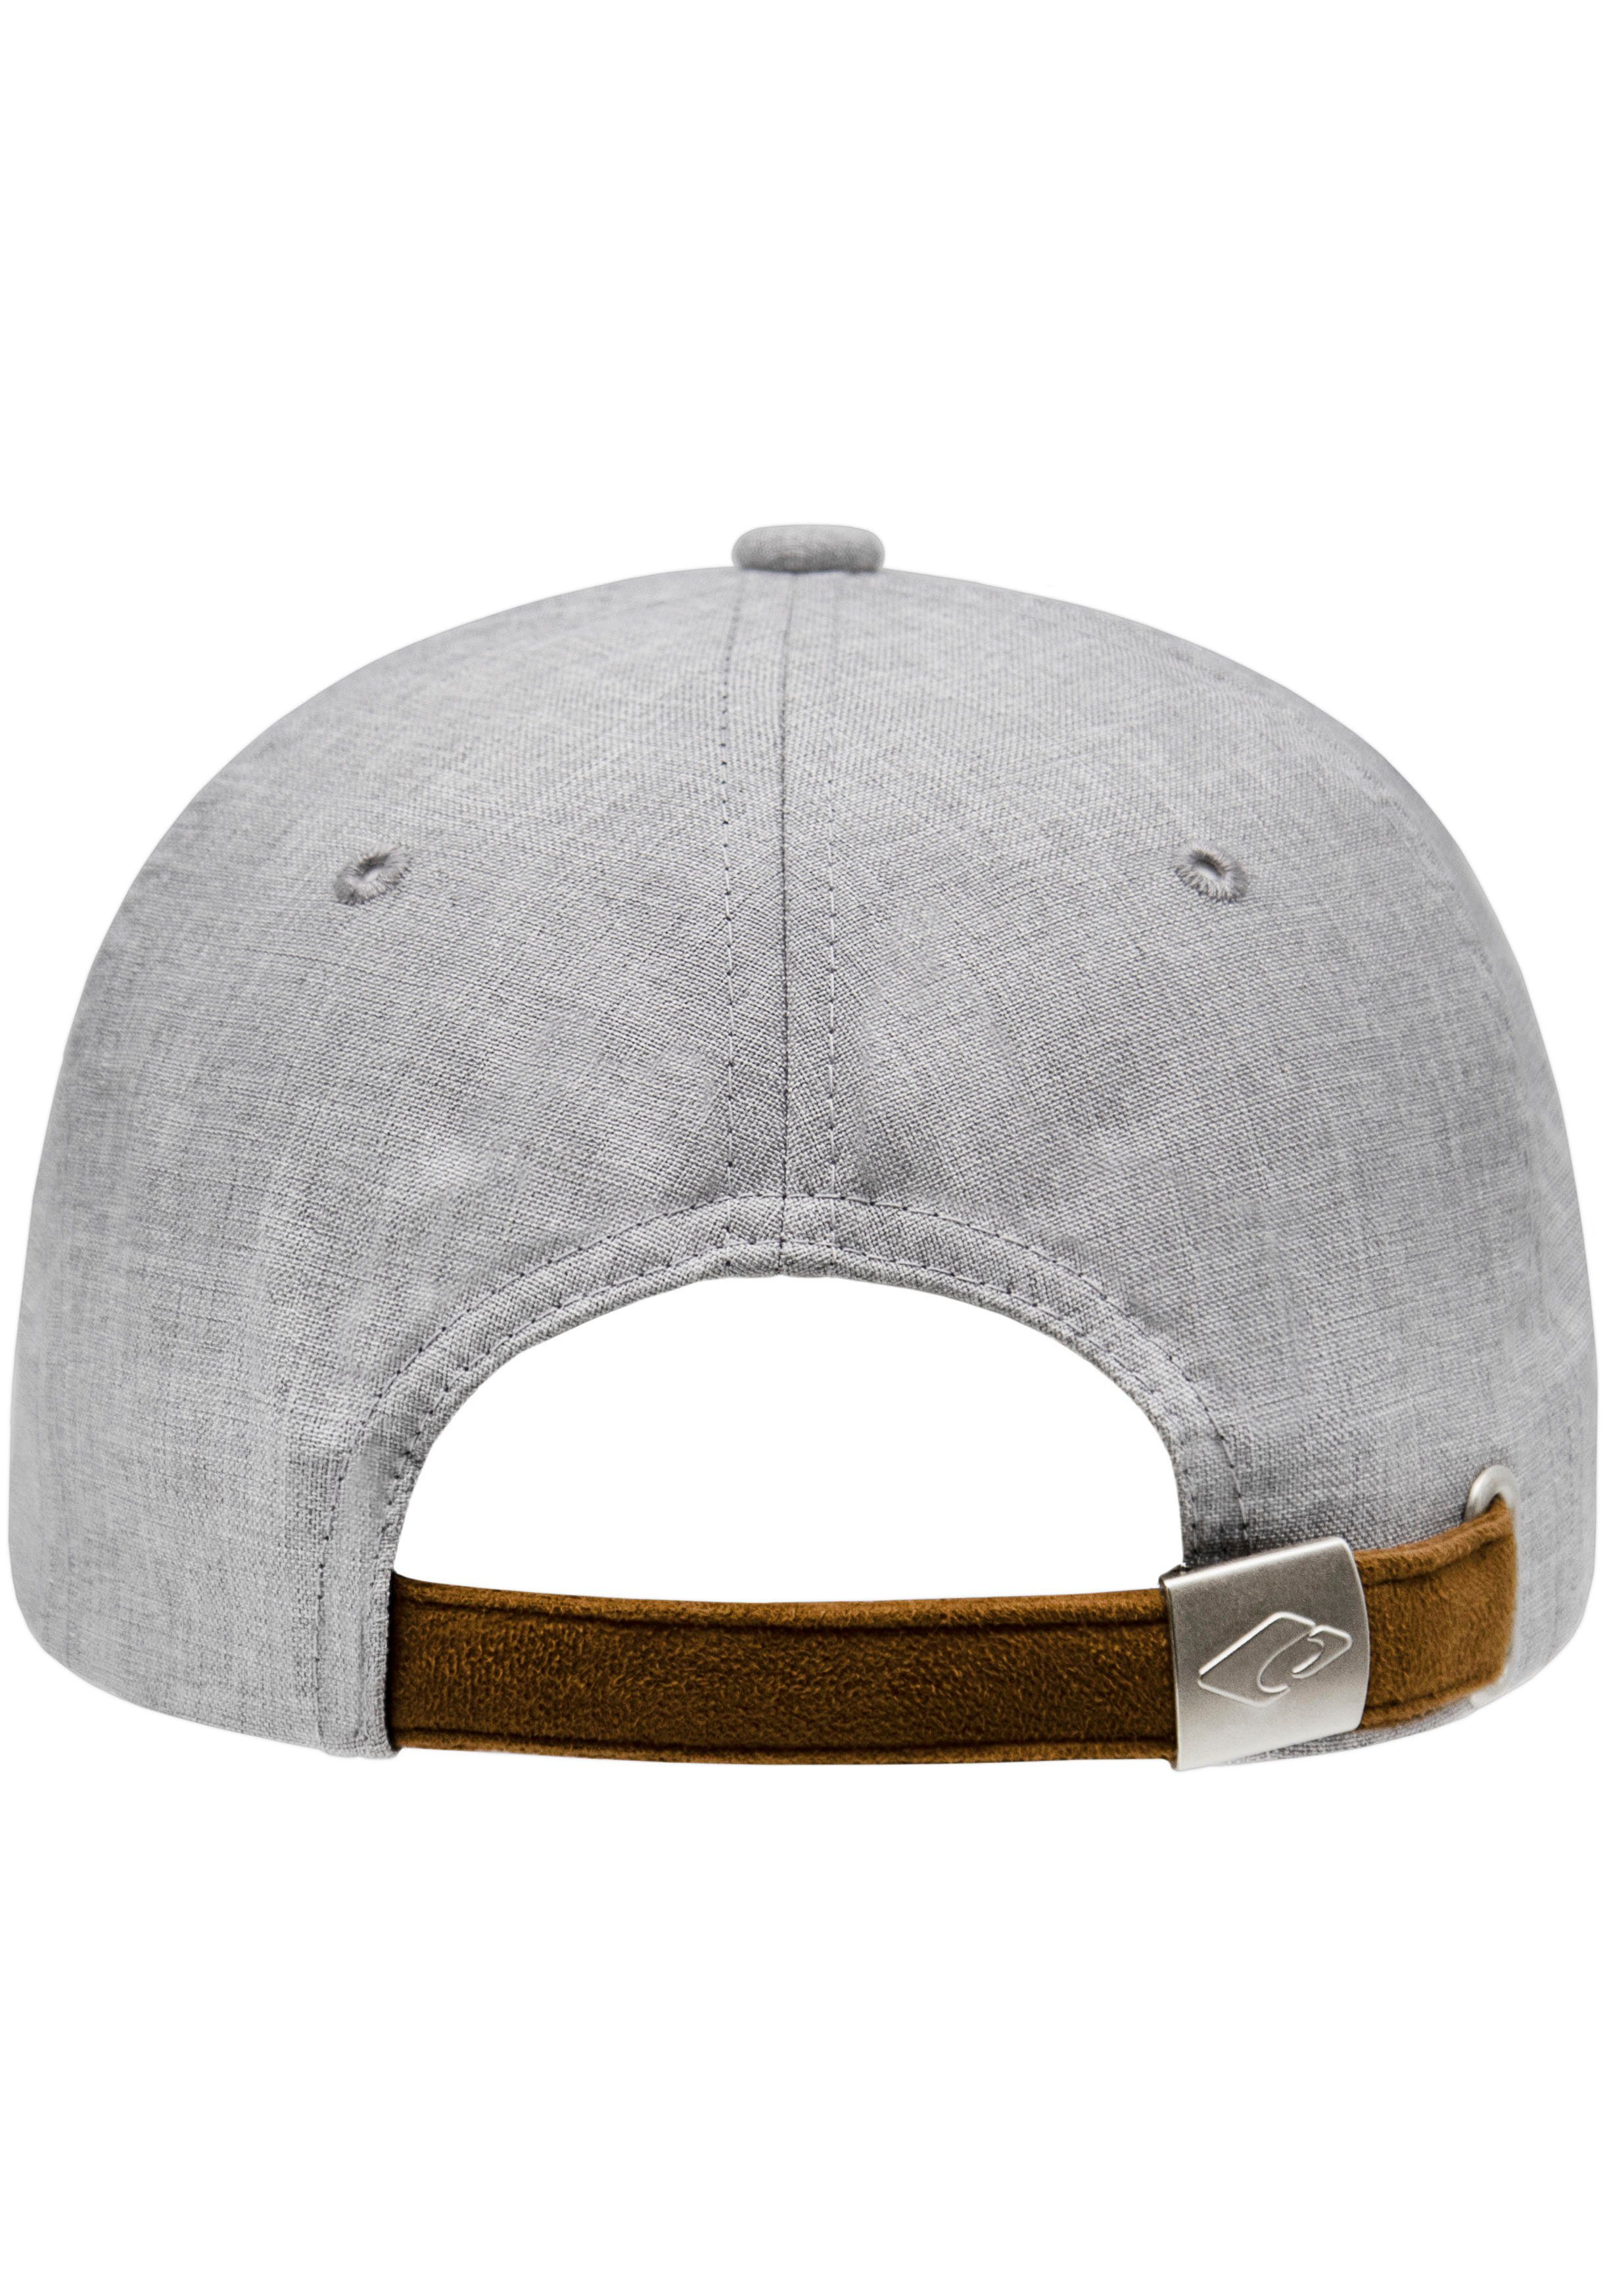 chillouts Baseball Cap Amadora Hat Optik, hellgrau in Size, melierter verstellbar One